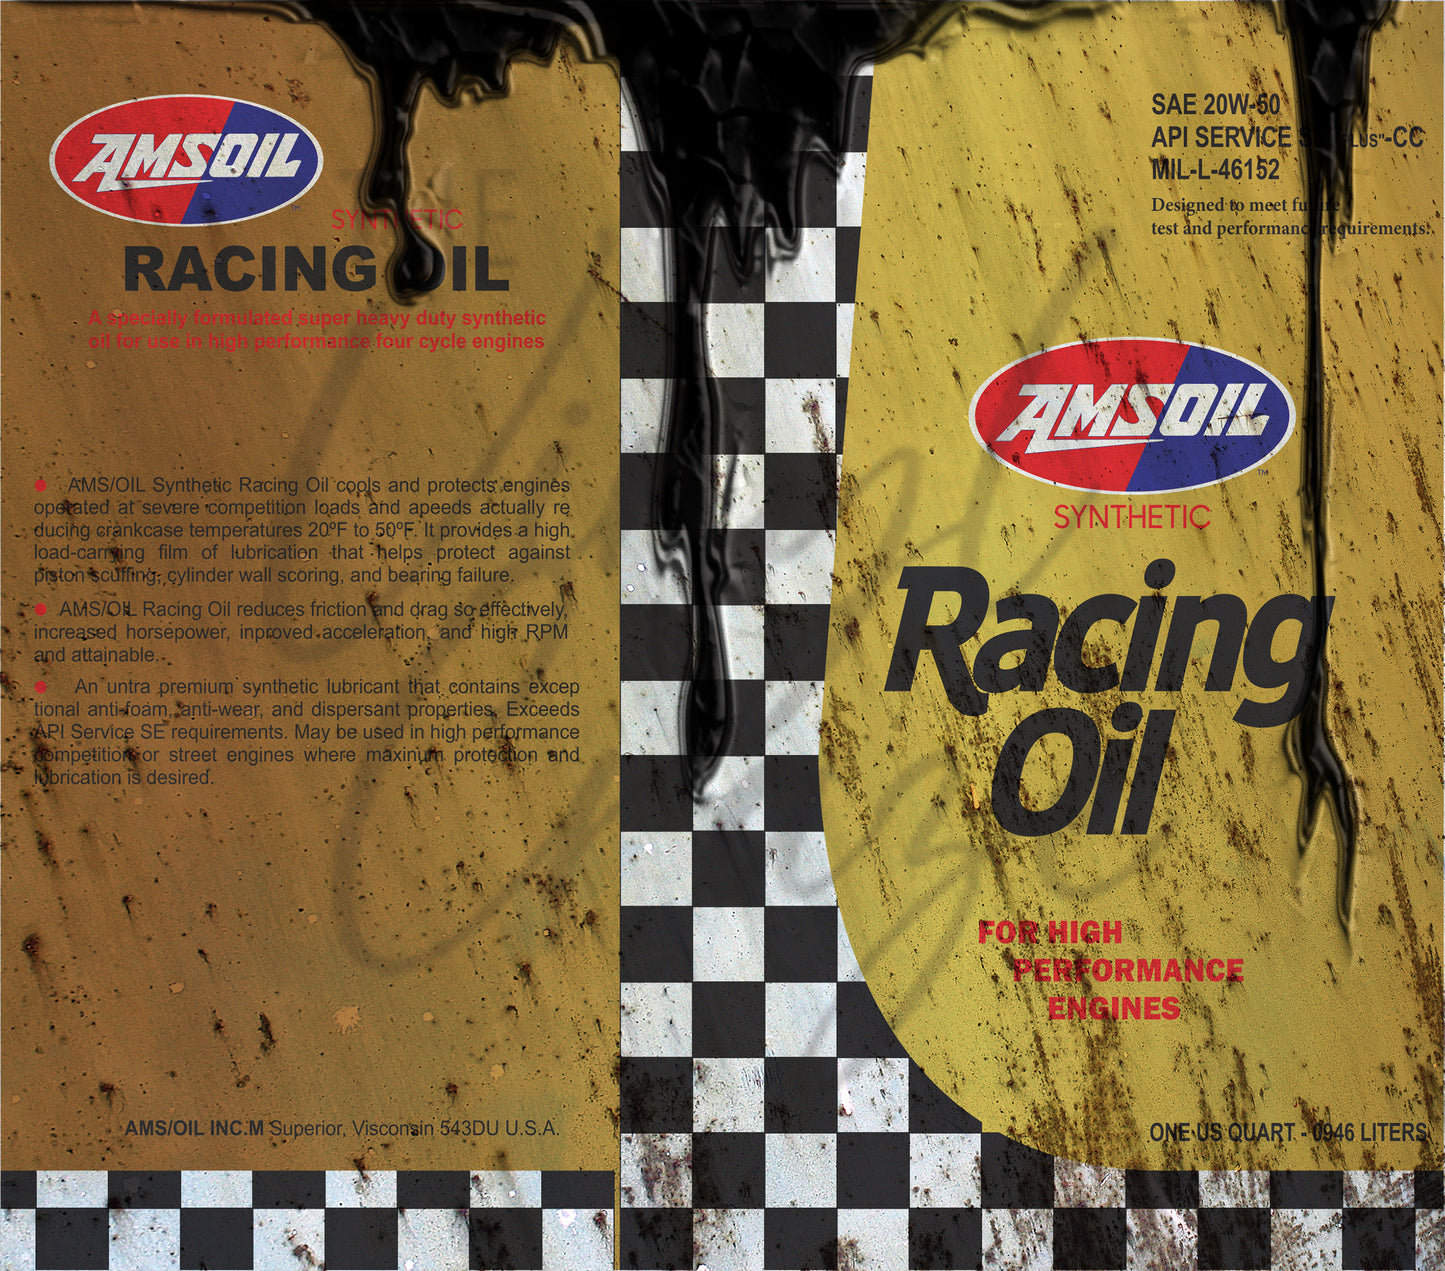 Racing Oil Adhesive Vinyl Wrap